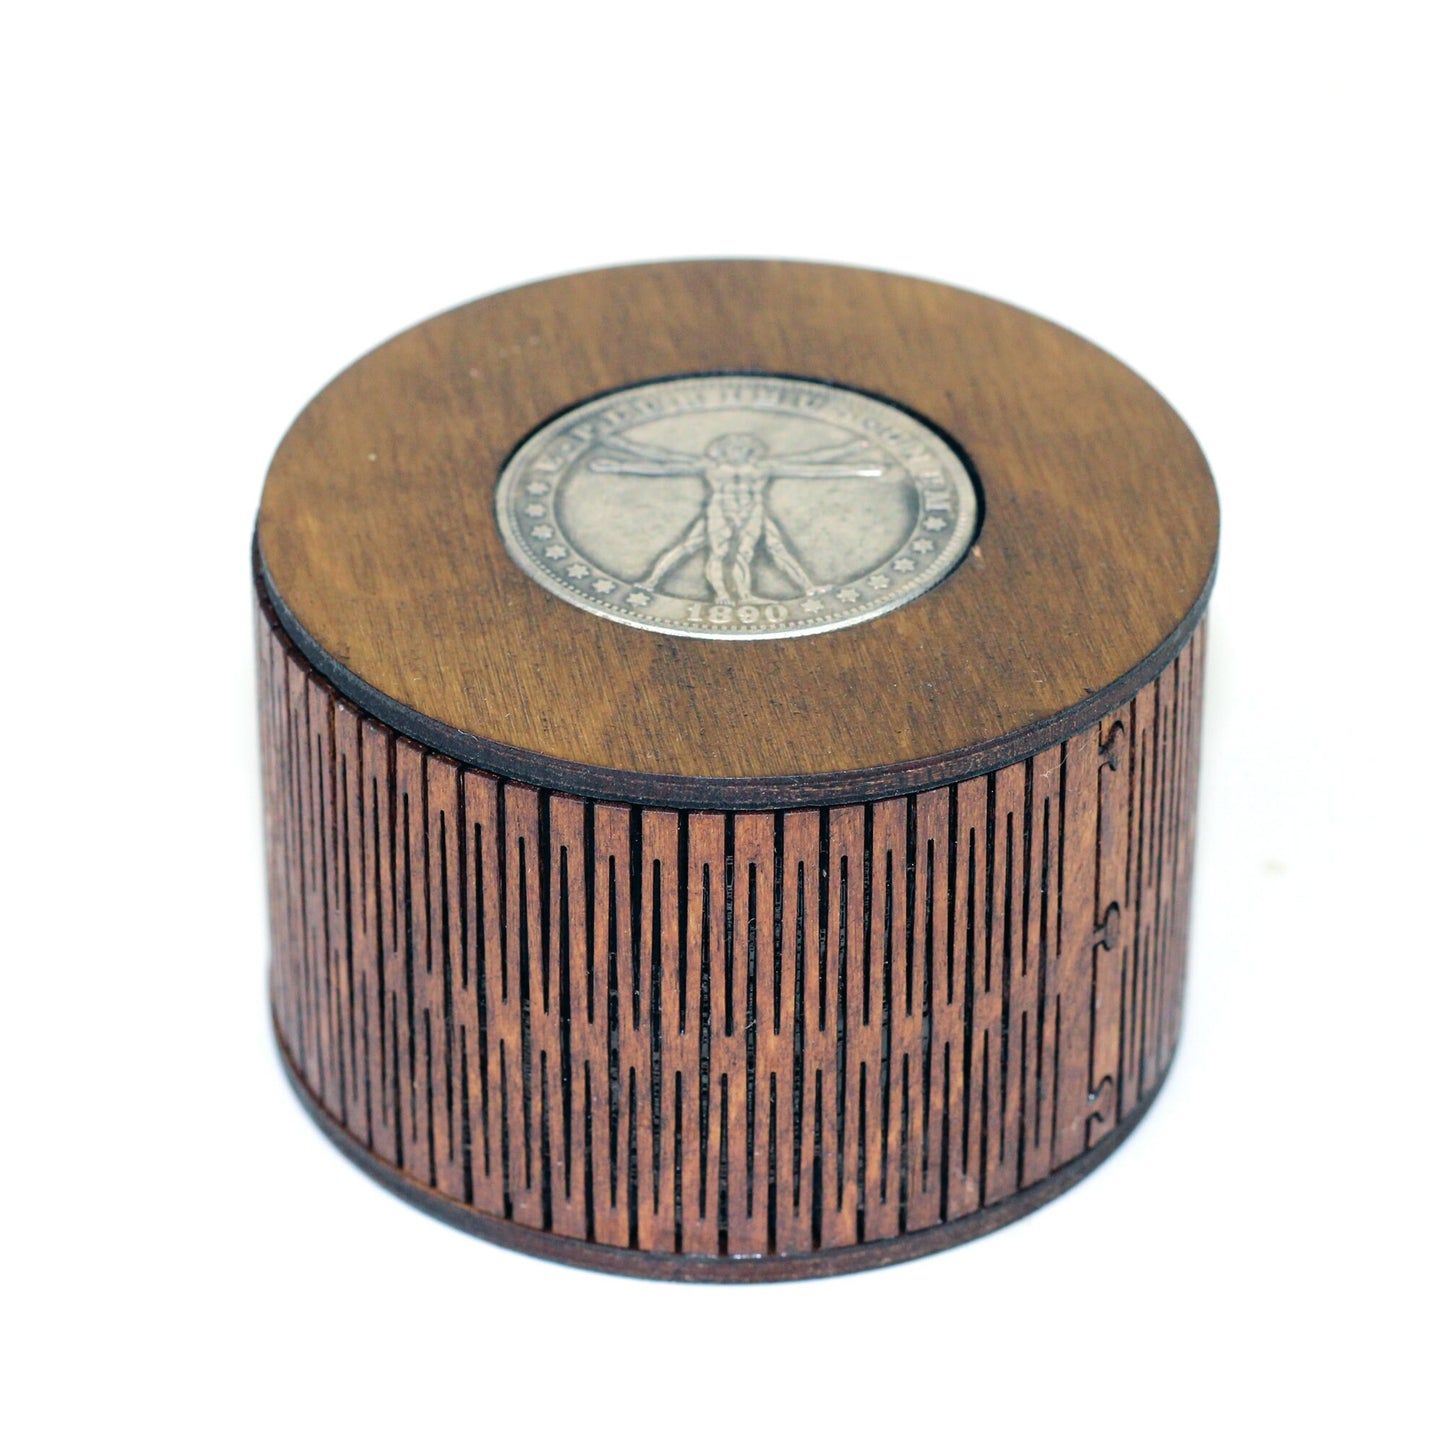 Leonardo da Vinci's Vitruvian Man coin design personalised wooden keepsake box. A gothic jewellery box, Victorian style custom wood trinket